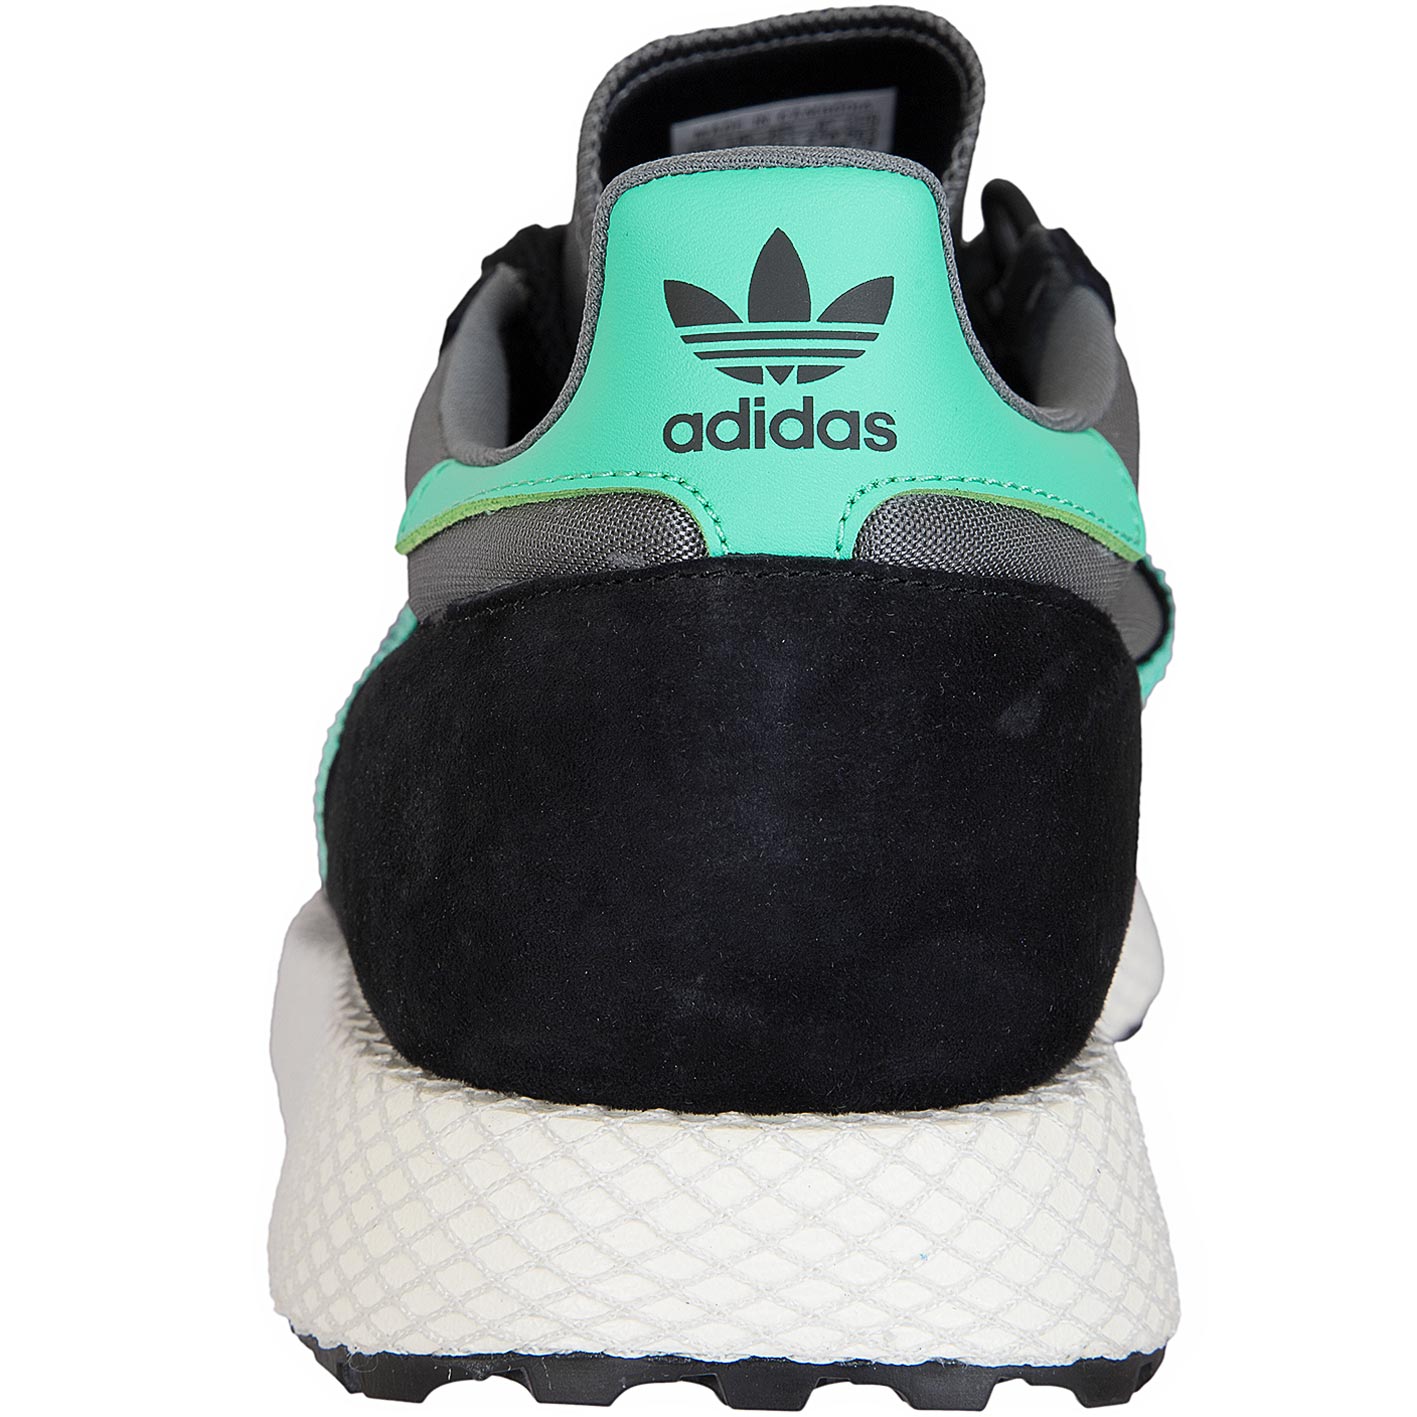 ☆ Adidas Originals Sneaker Forest Grove schwarz/türkis - hier bestellen!